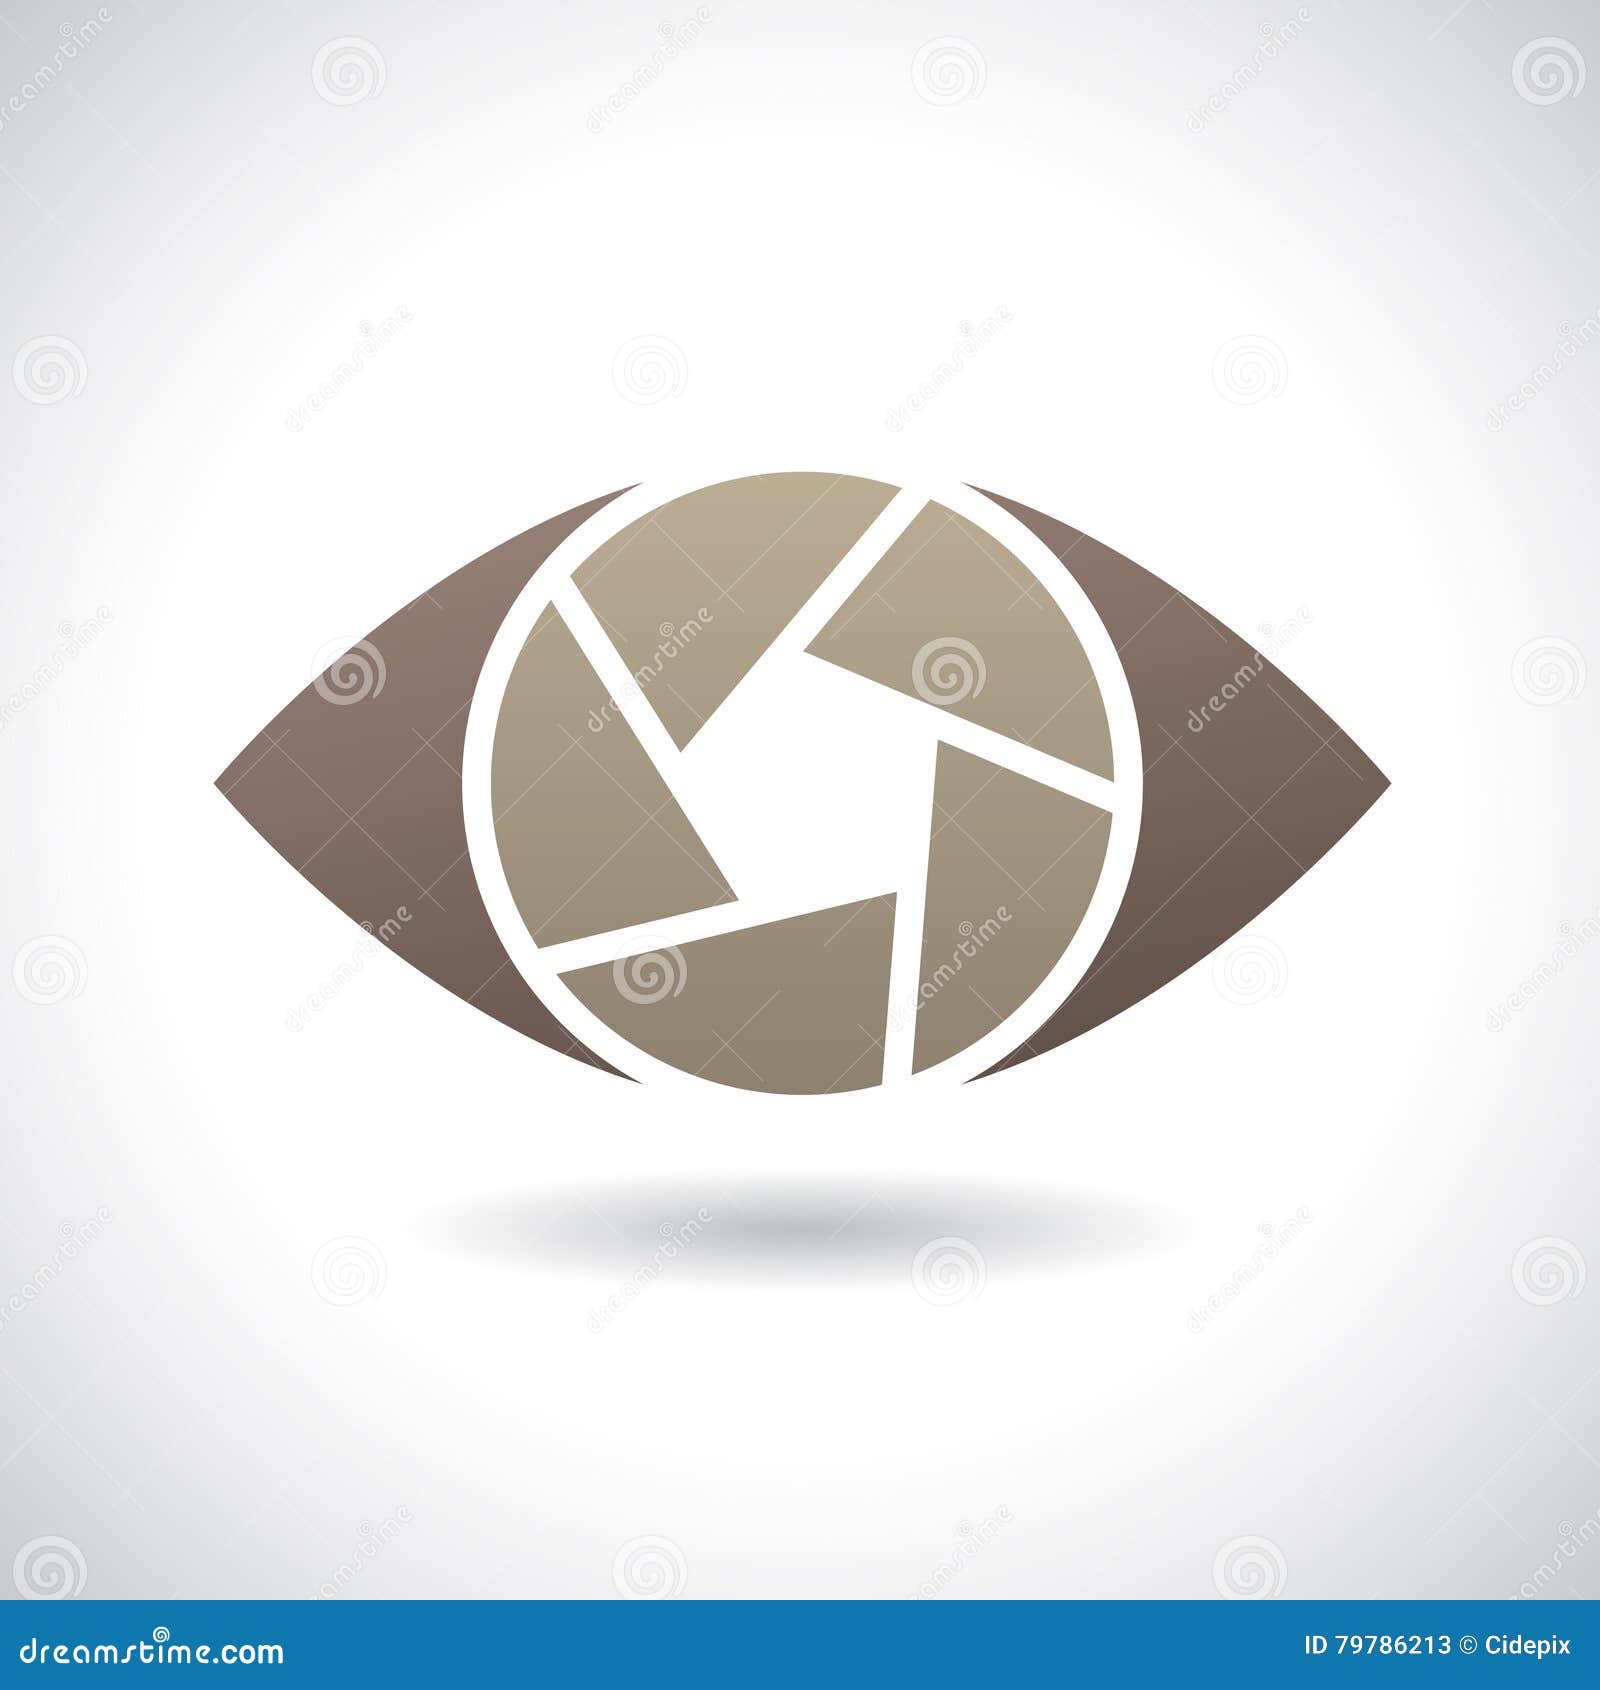 Logo Icon Of A Shutter Eye Vector Illustration Stock Vector